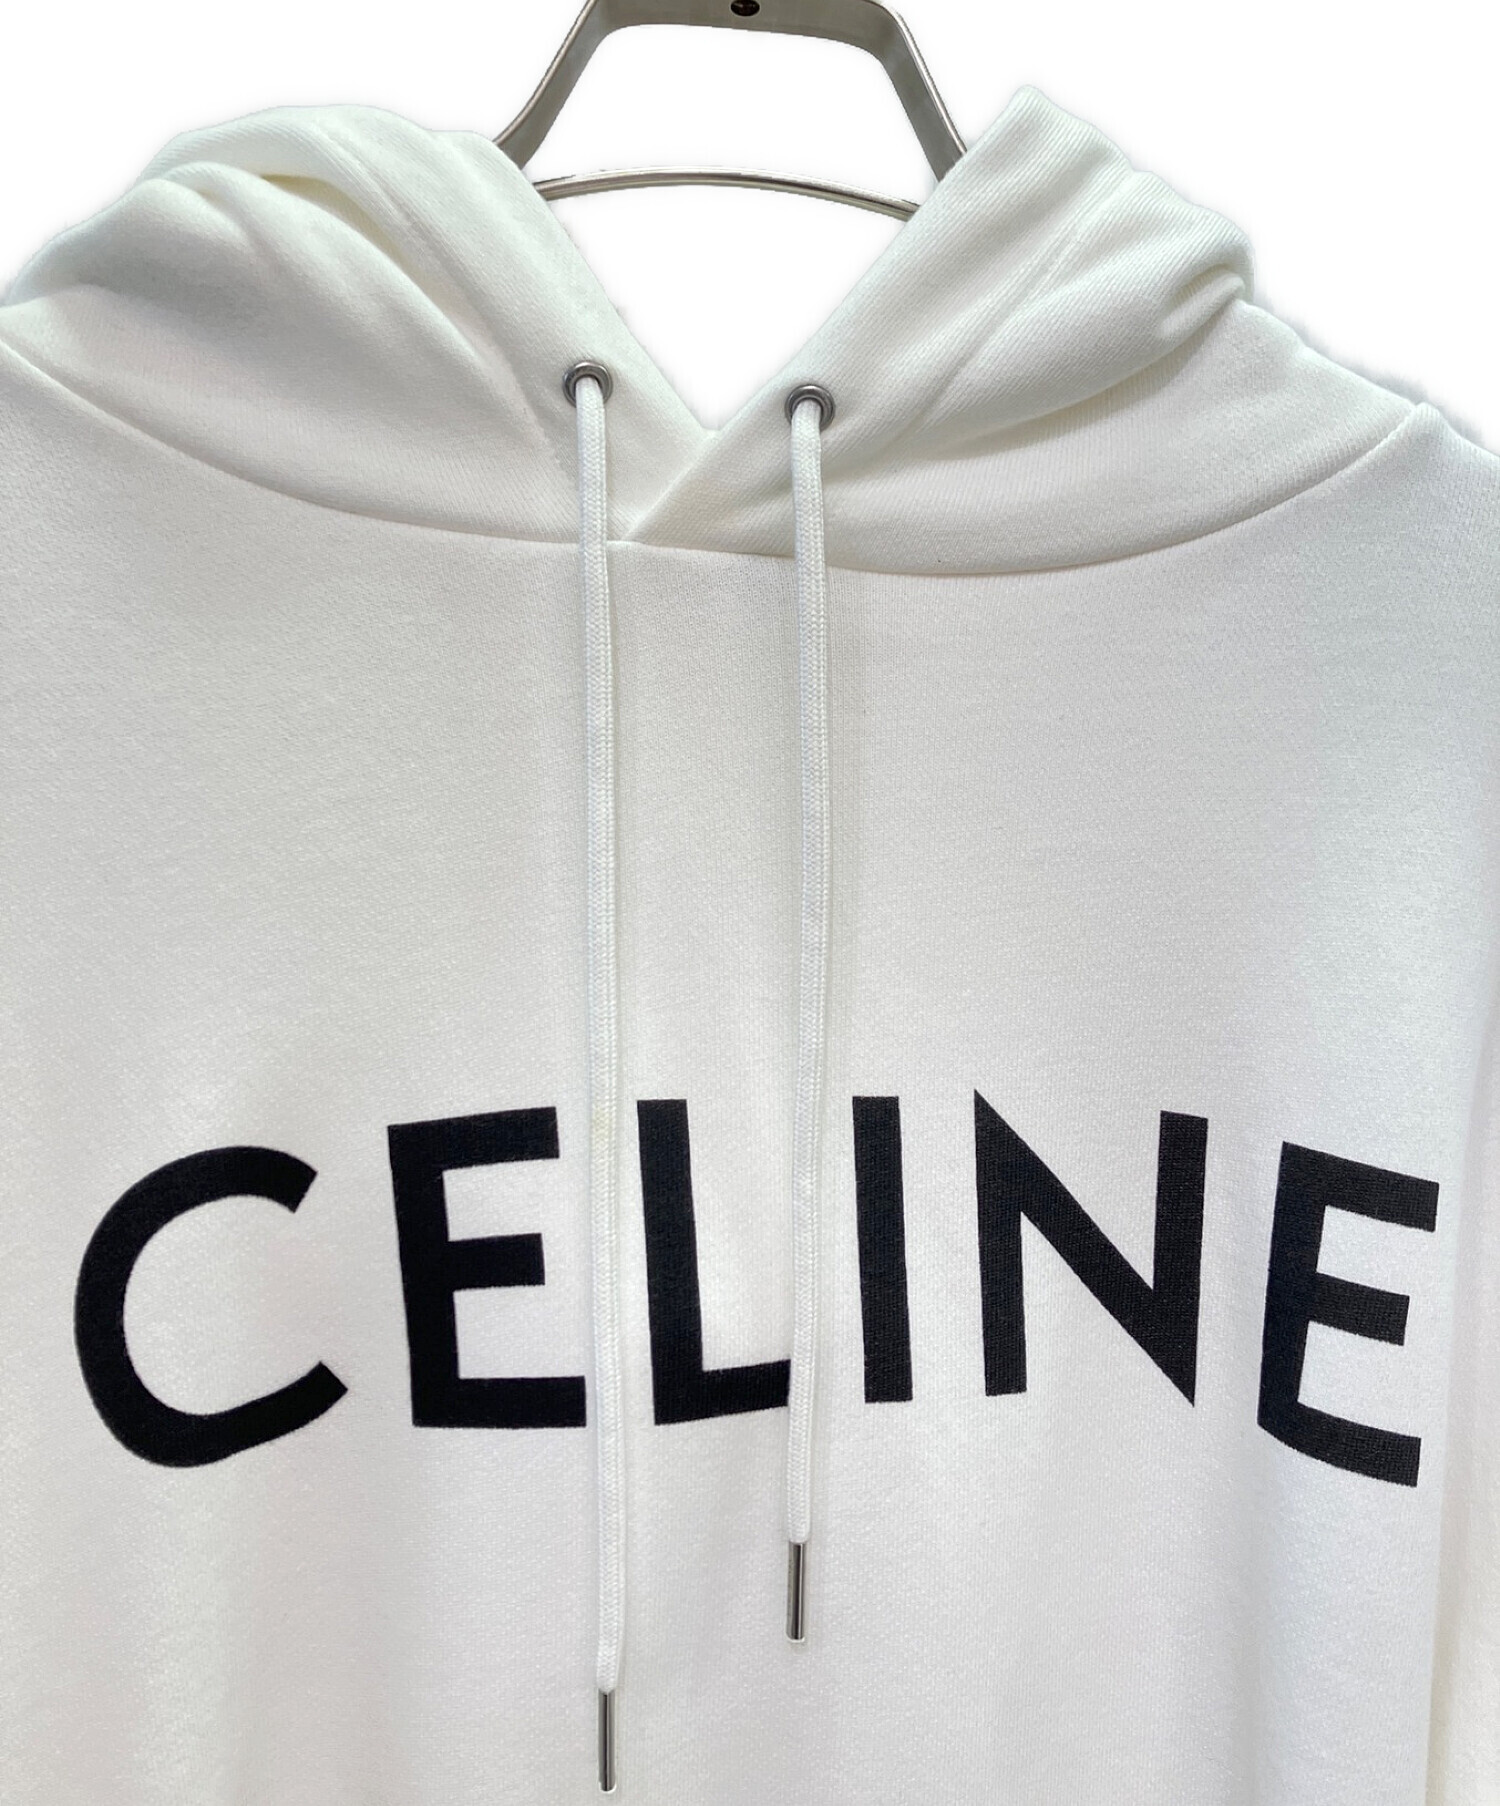 CELINE (セリーヌ) ロゴパーカー ホワイト サイズ:S